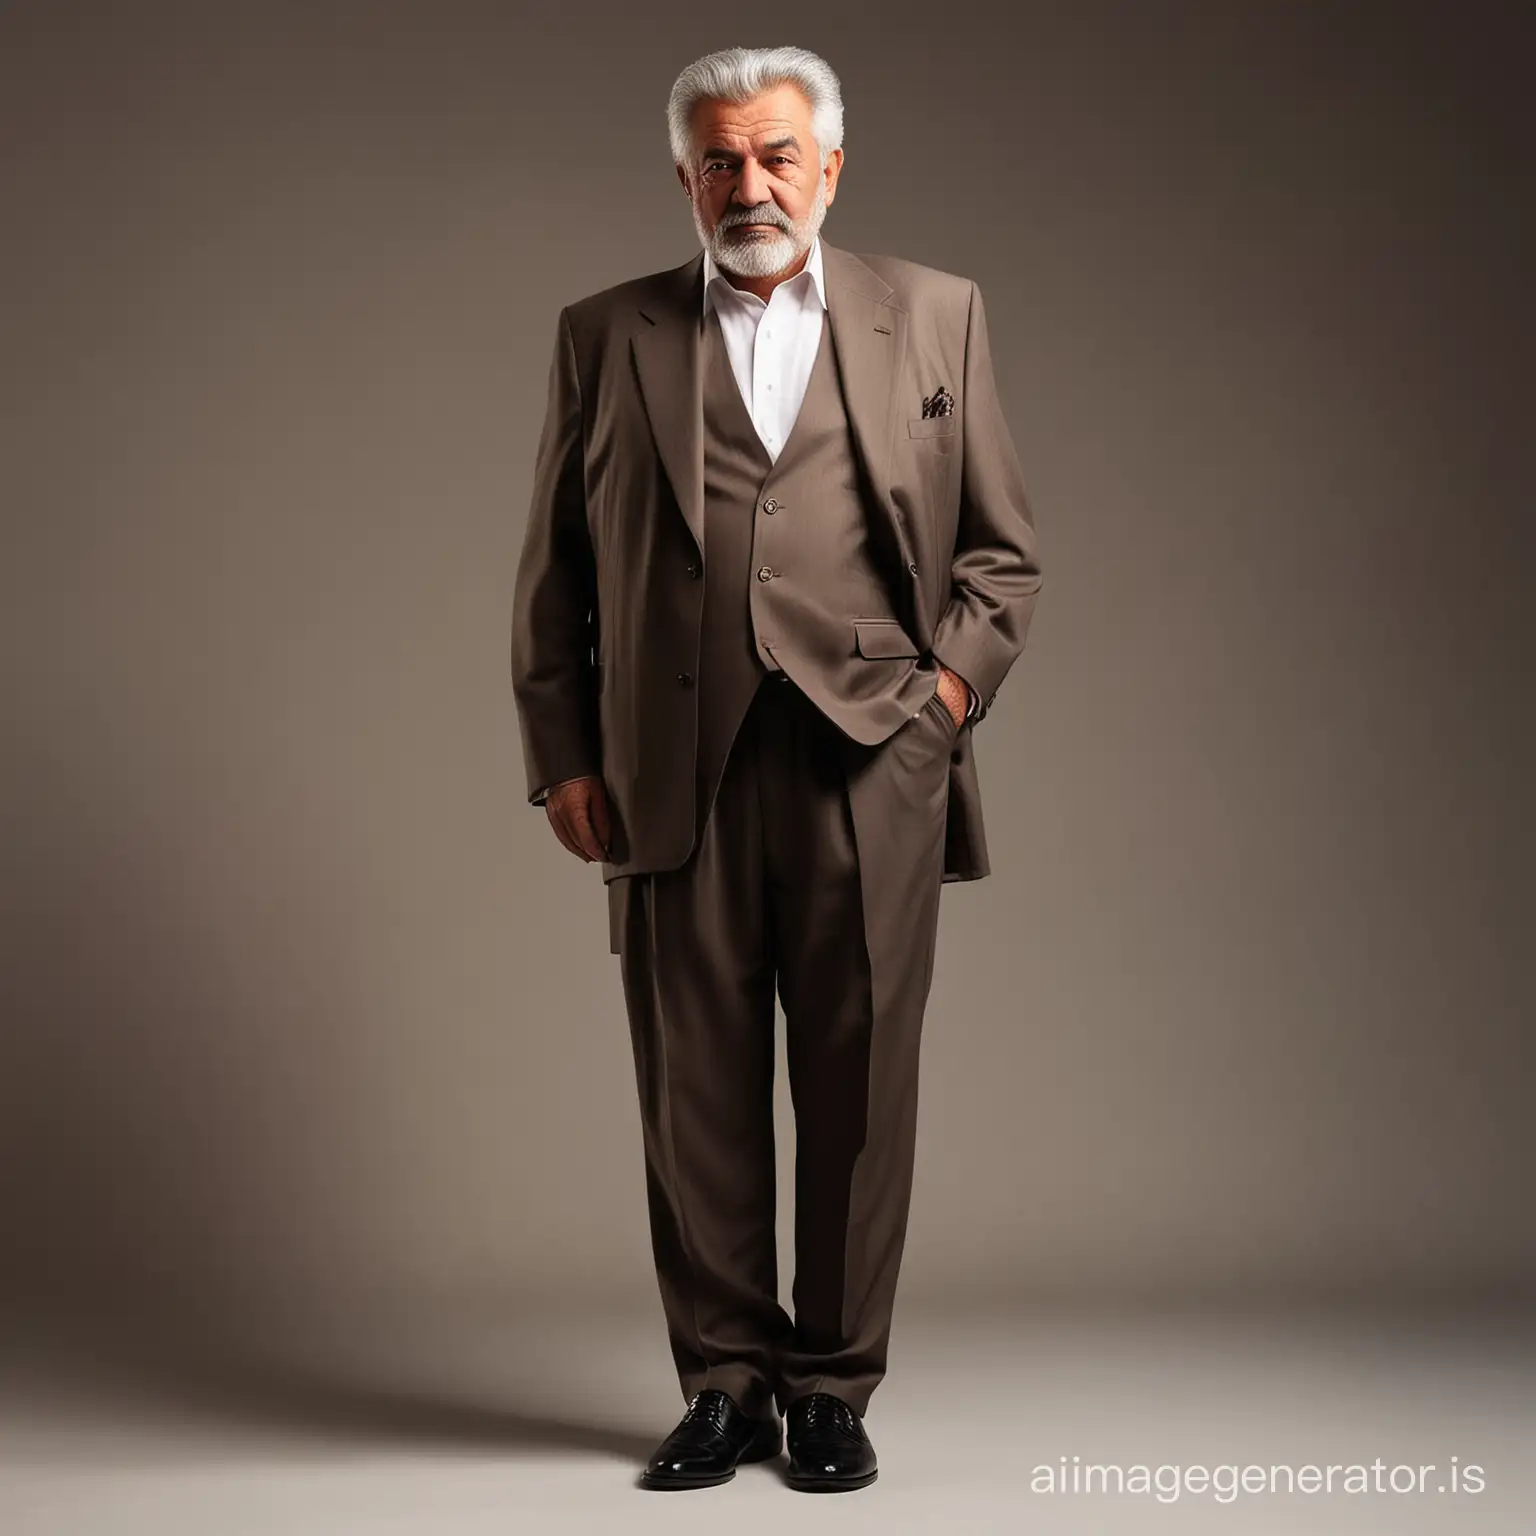 Elegant-Iranian-Gentleman-in-Dark-Brown-Suit-on-Cream-Background